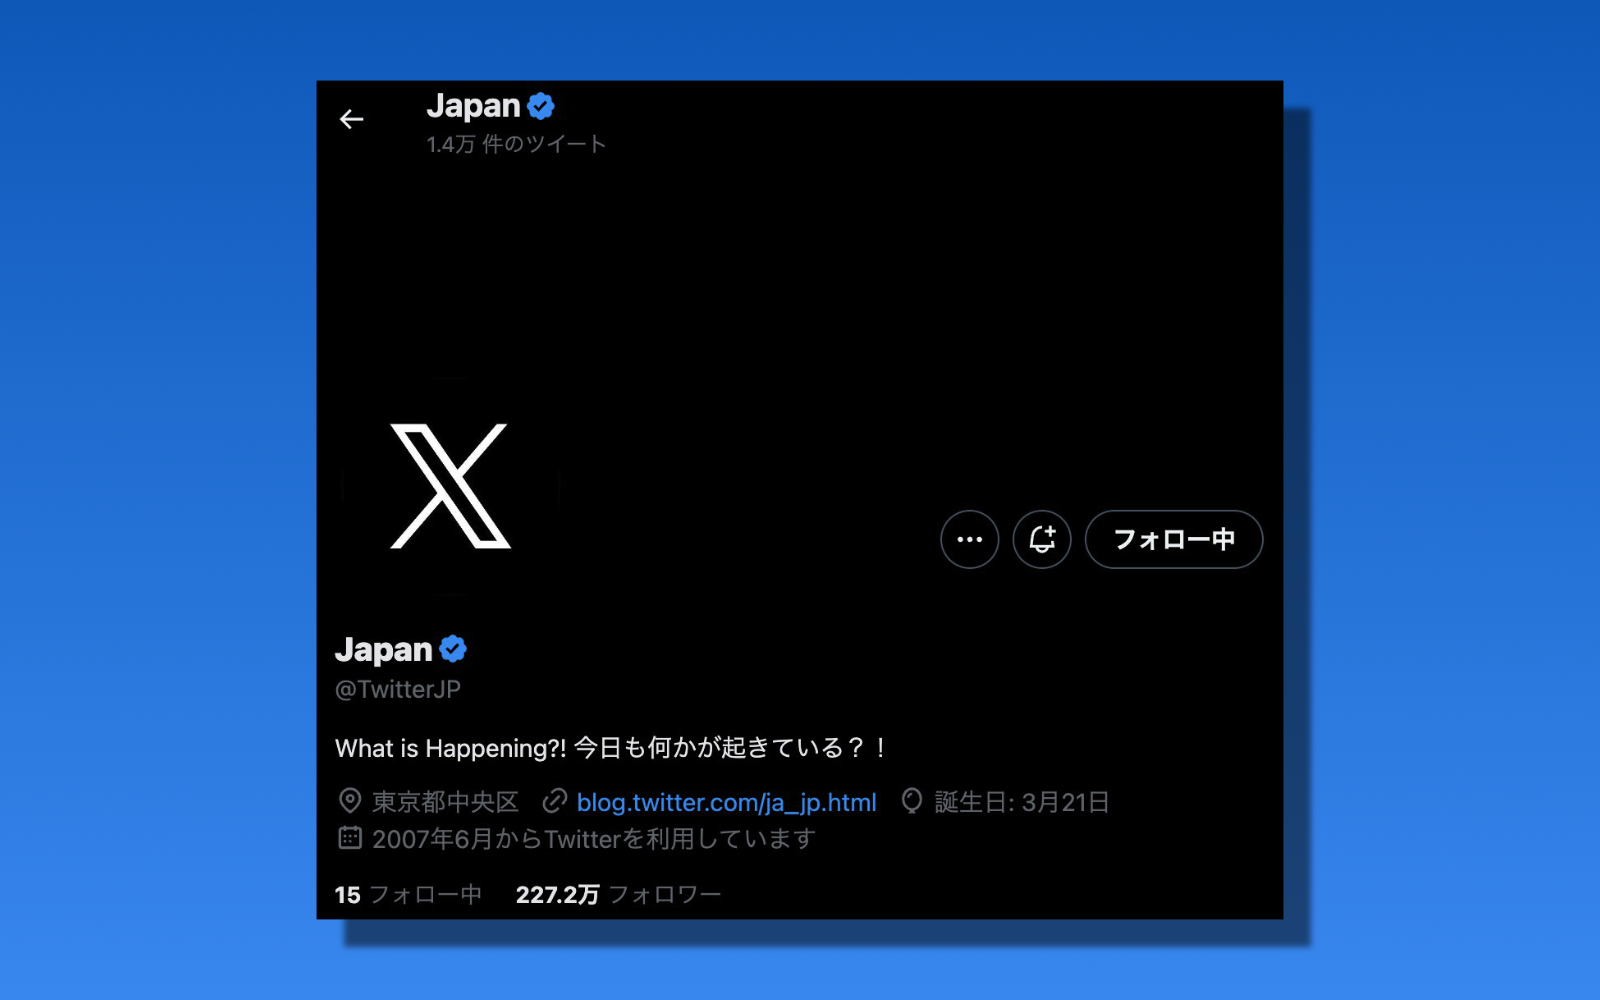 Twitter Japan just japan